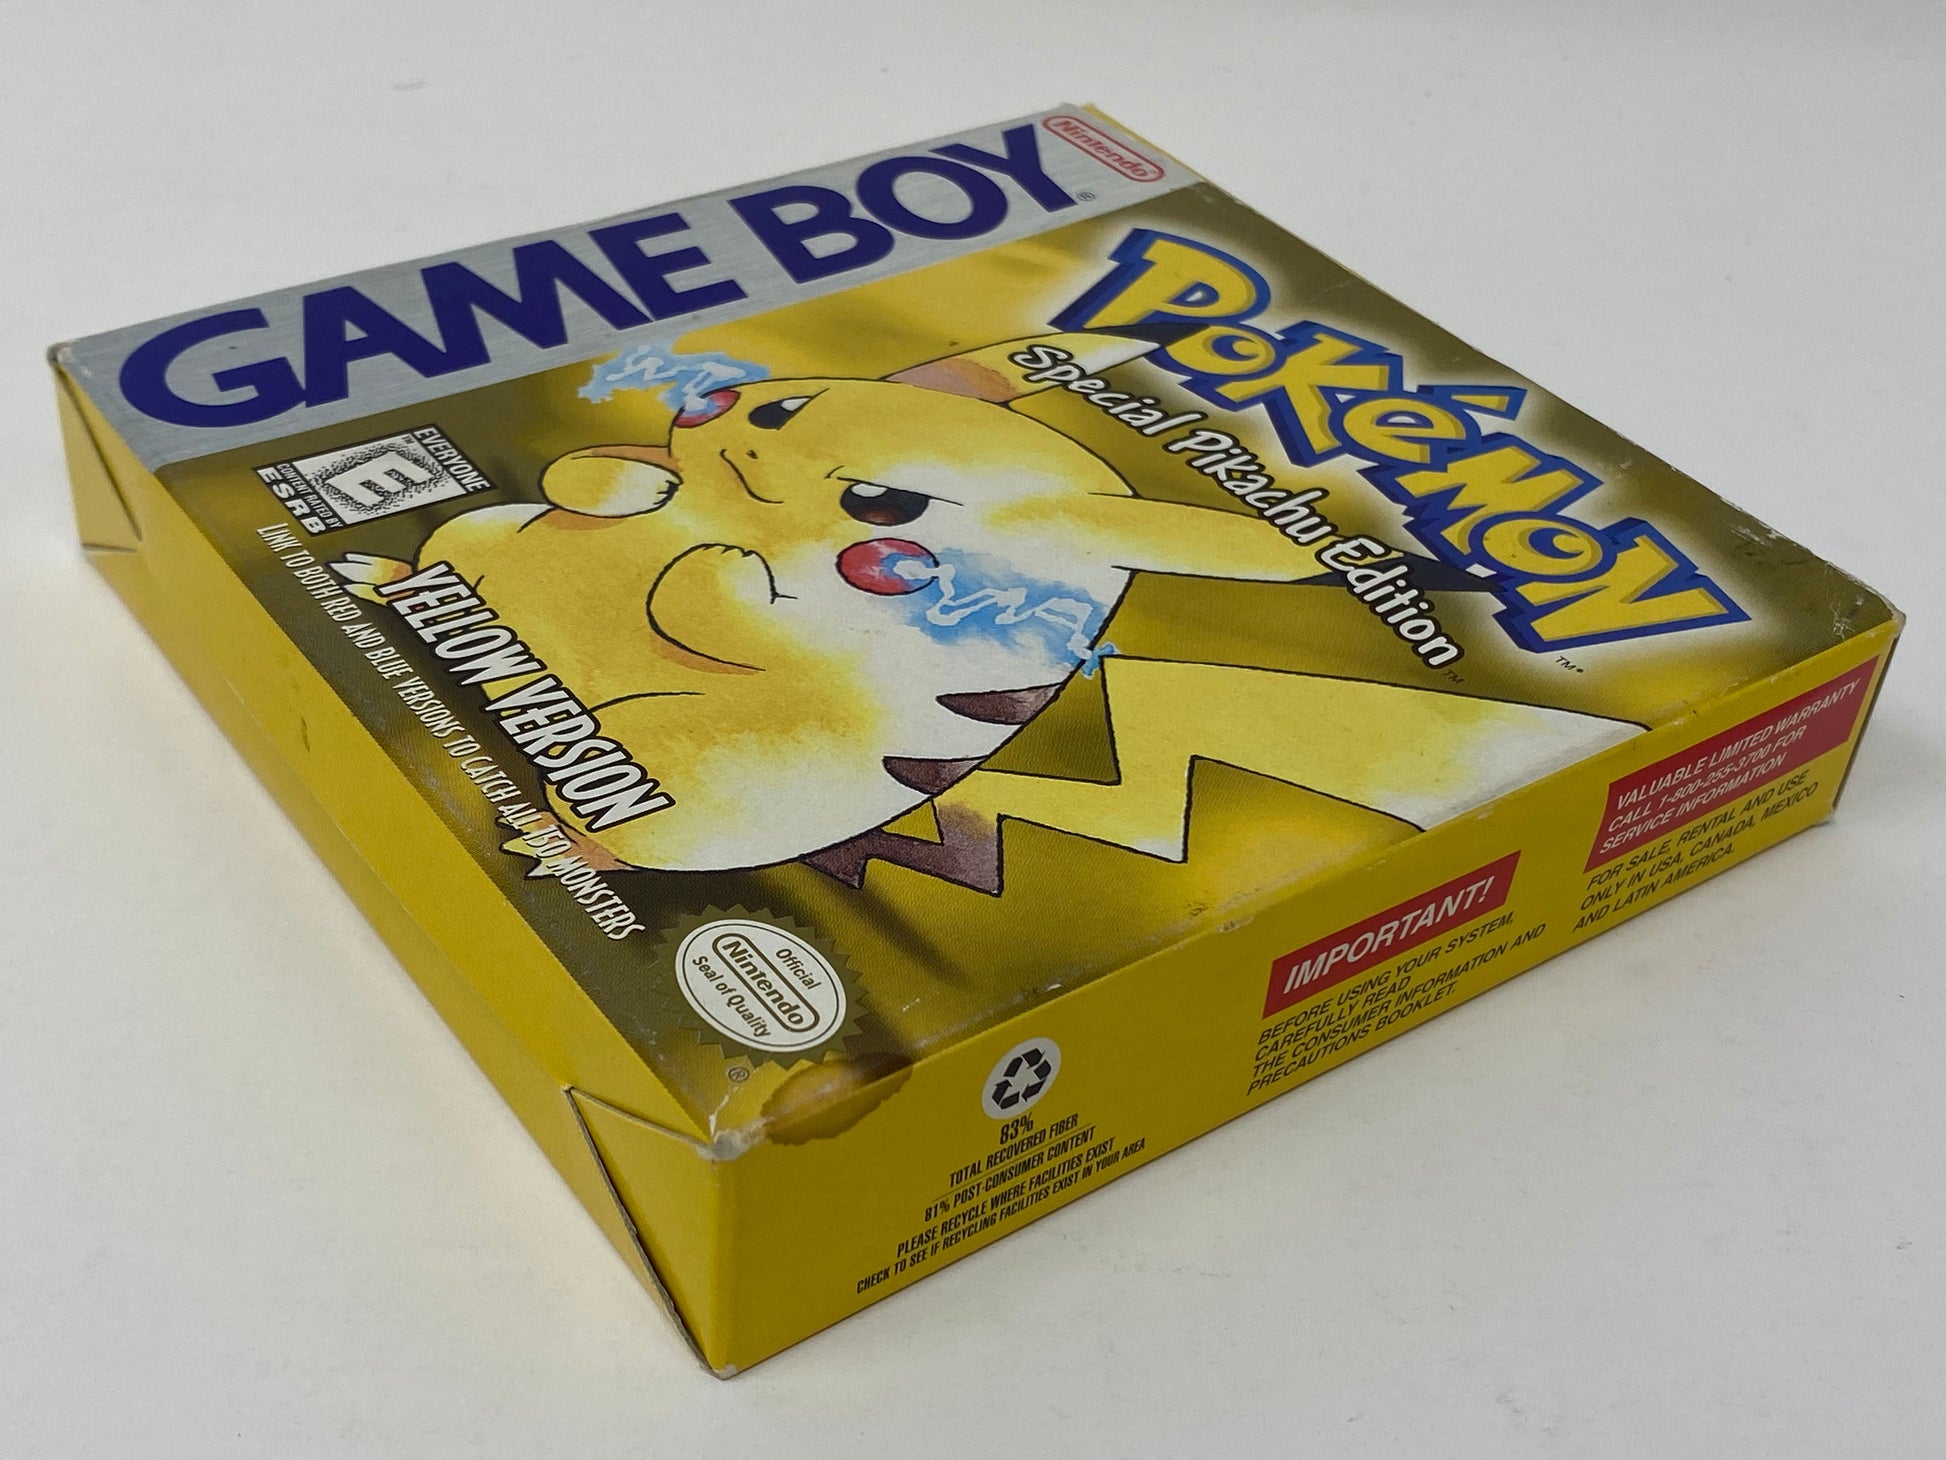 Pokémon Yellow Special Pikachu Edition Nintendo Game Boy Físico